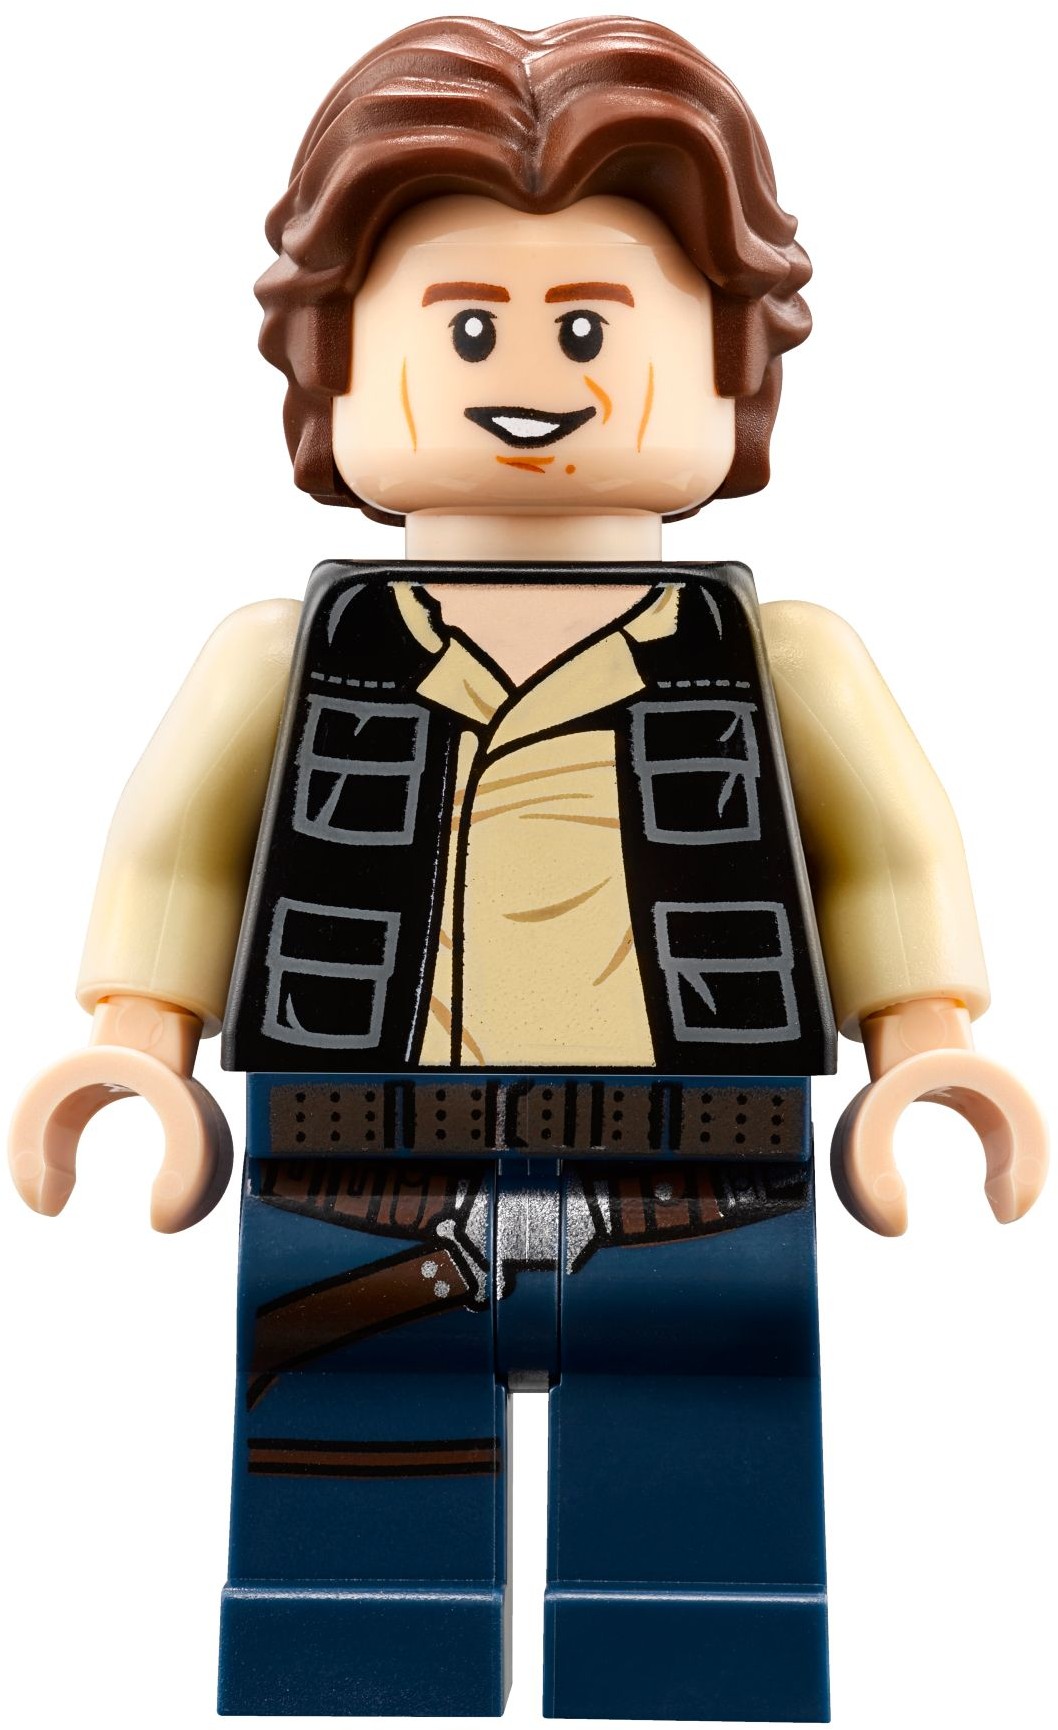 Lego Star Wars Episode VII Han Solo & Blaster Minifigure 75105 **New** 